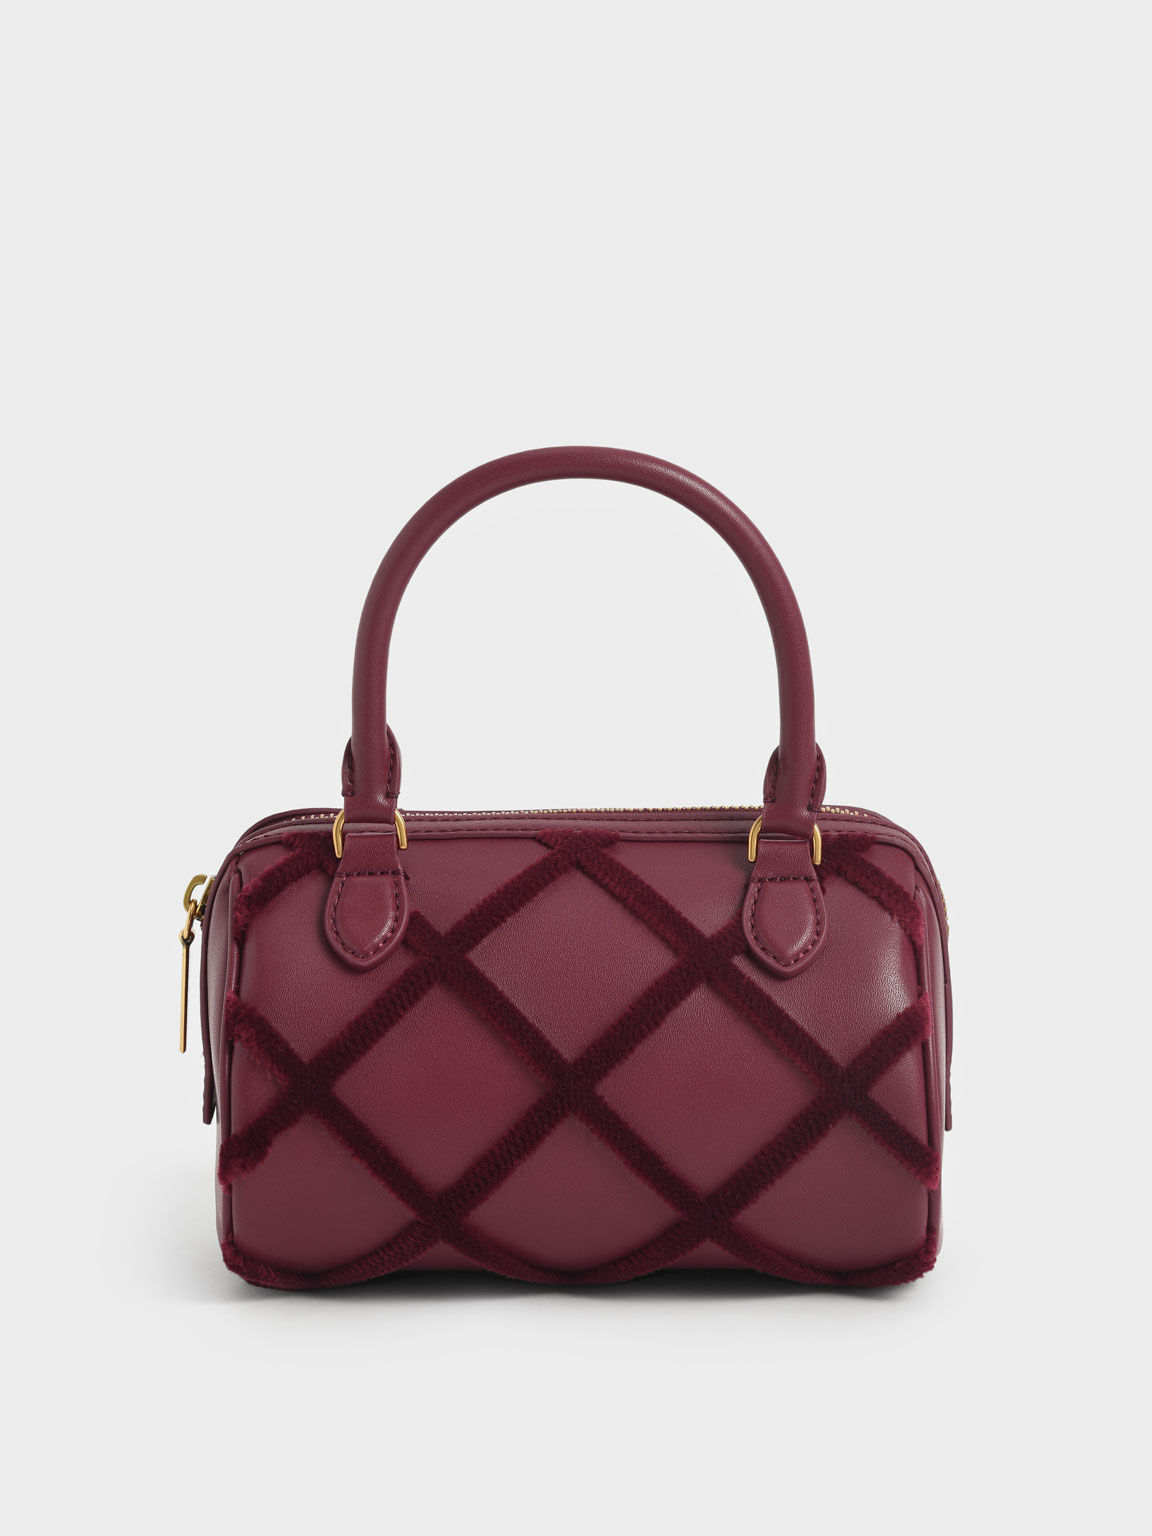 Cleo Criss-Cross Pattern Top Handle Bag, Burgundy, hi-res